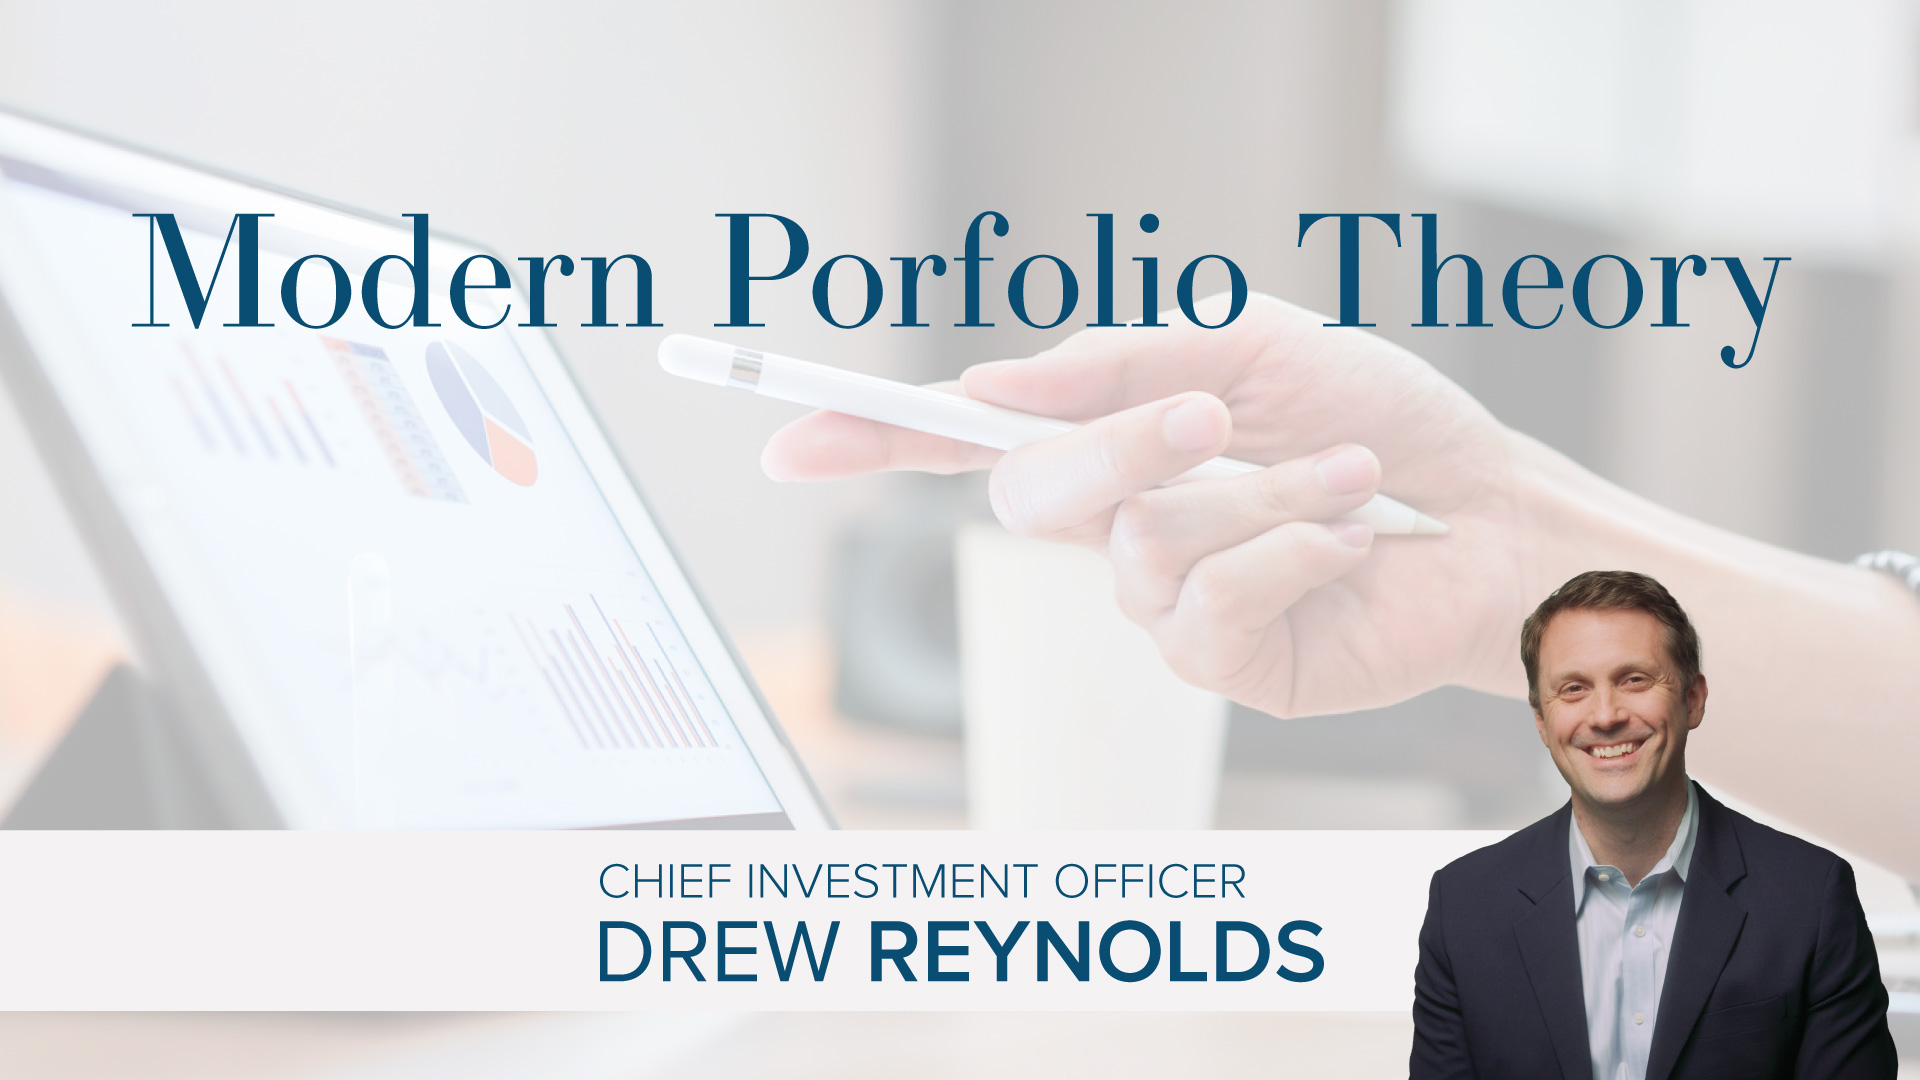 Drew Reynolds: Modern Portfolio Theory